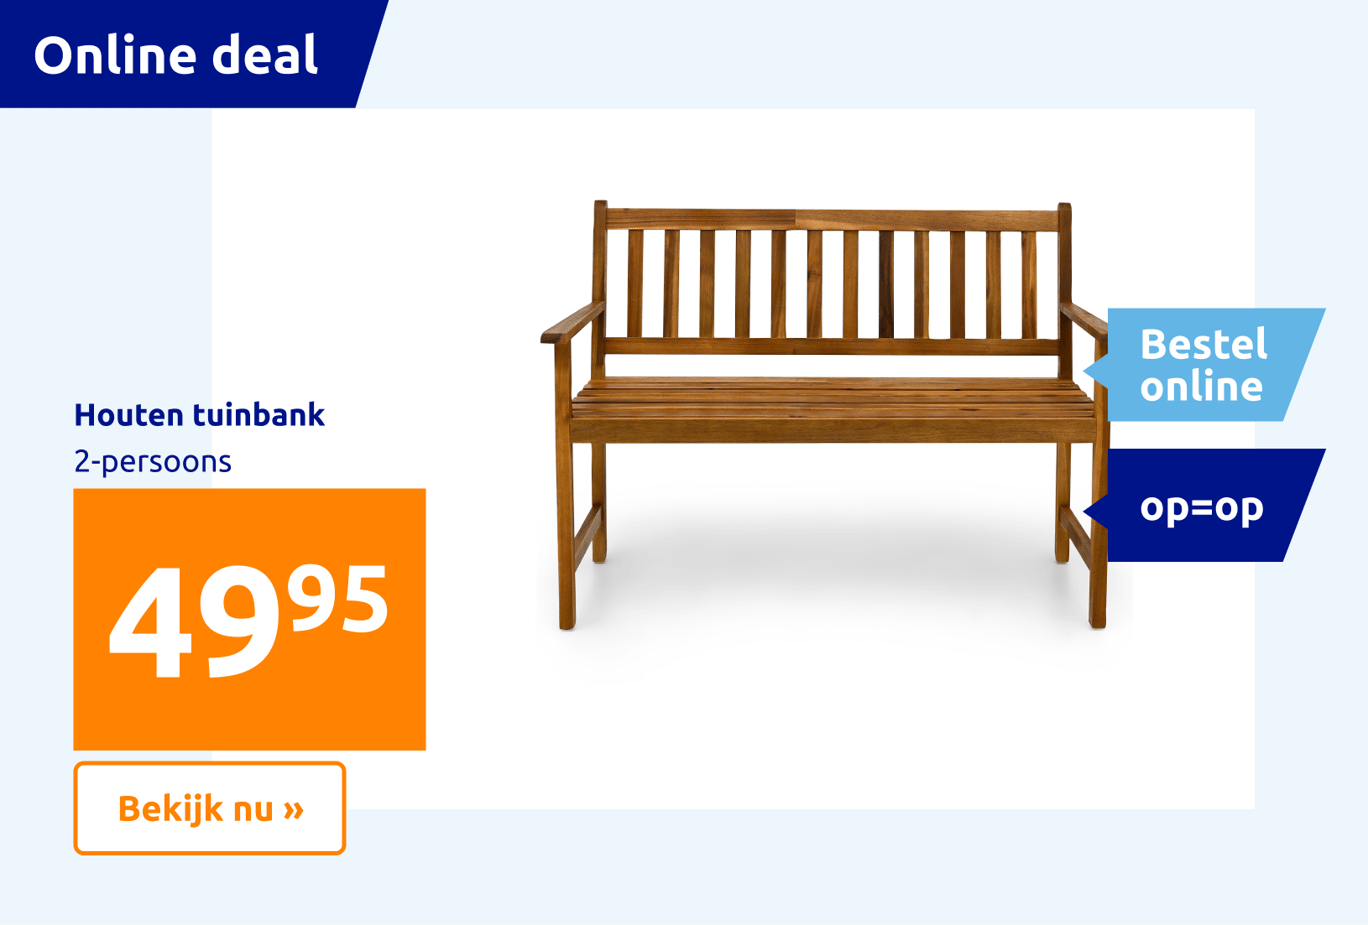 https://shop.action.com/nl-nl/p/8718964016471/houten-tuinbank?utm_source=web&utm_medium=ecomlink&utm_campaign=ecom